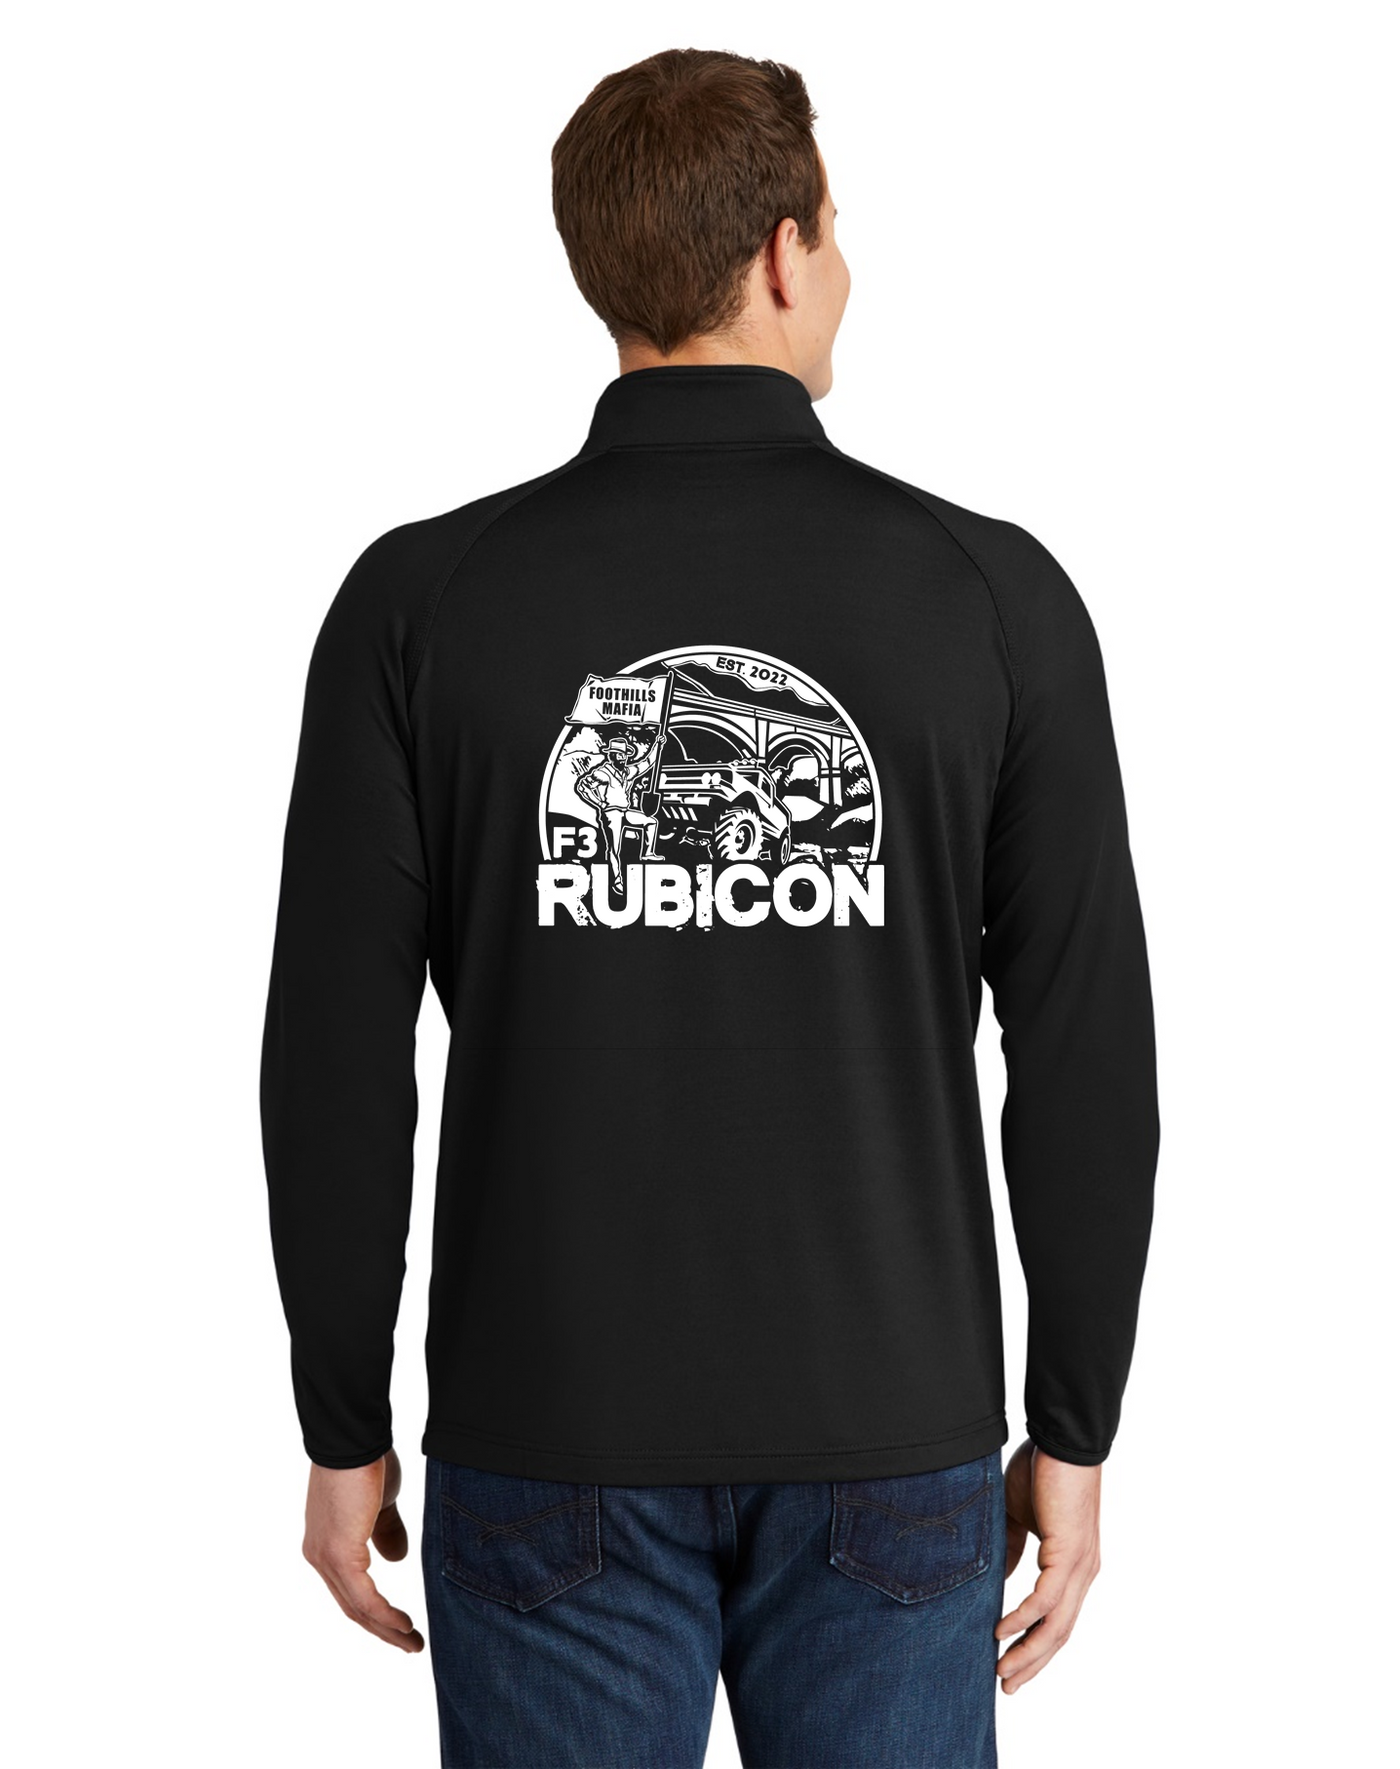 F3 Rubicon Foothills Mafia Pre-Order November 2022